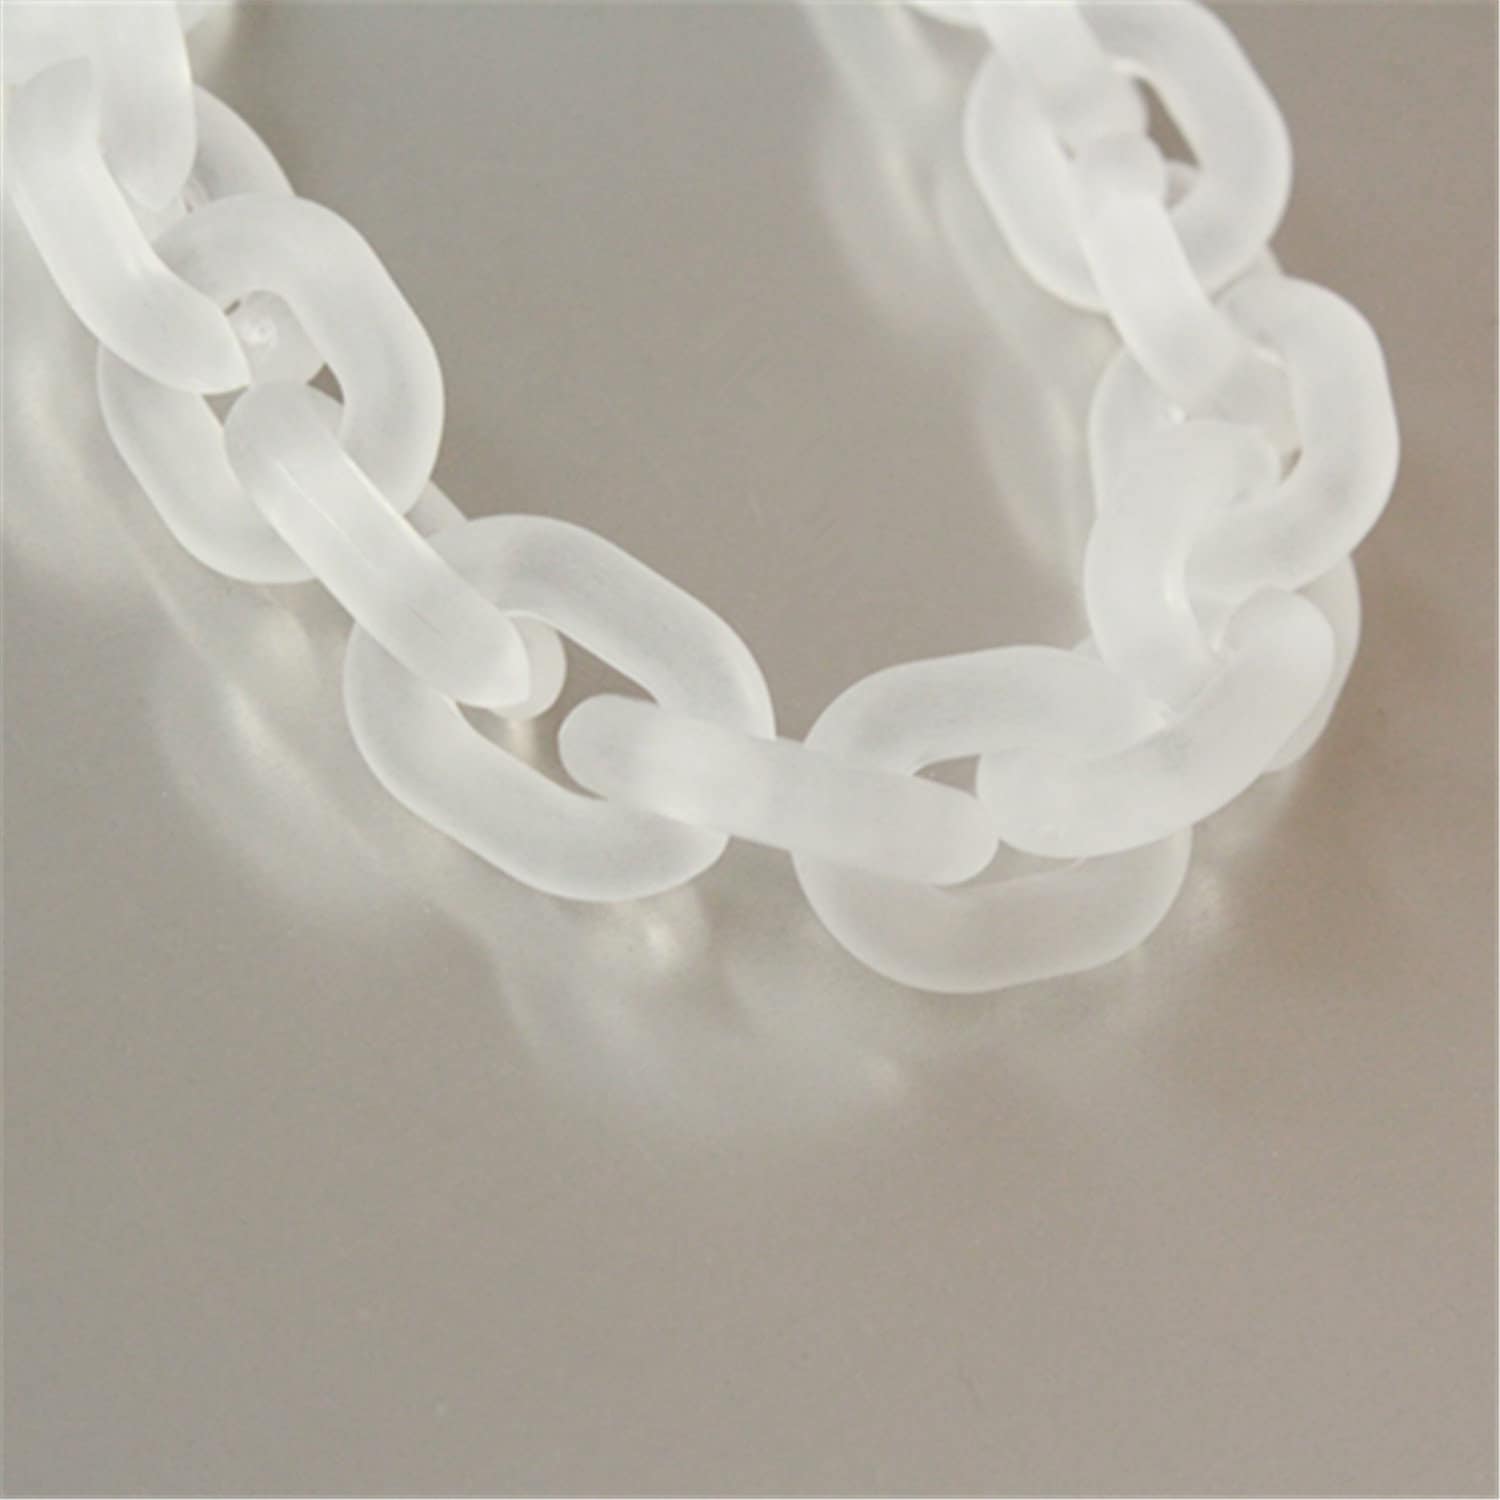 6mm Plastic Chain | Chunky Jewelry & Accessory Making (White / 2pcs x 38cm)